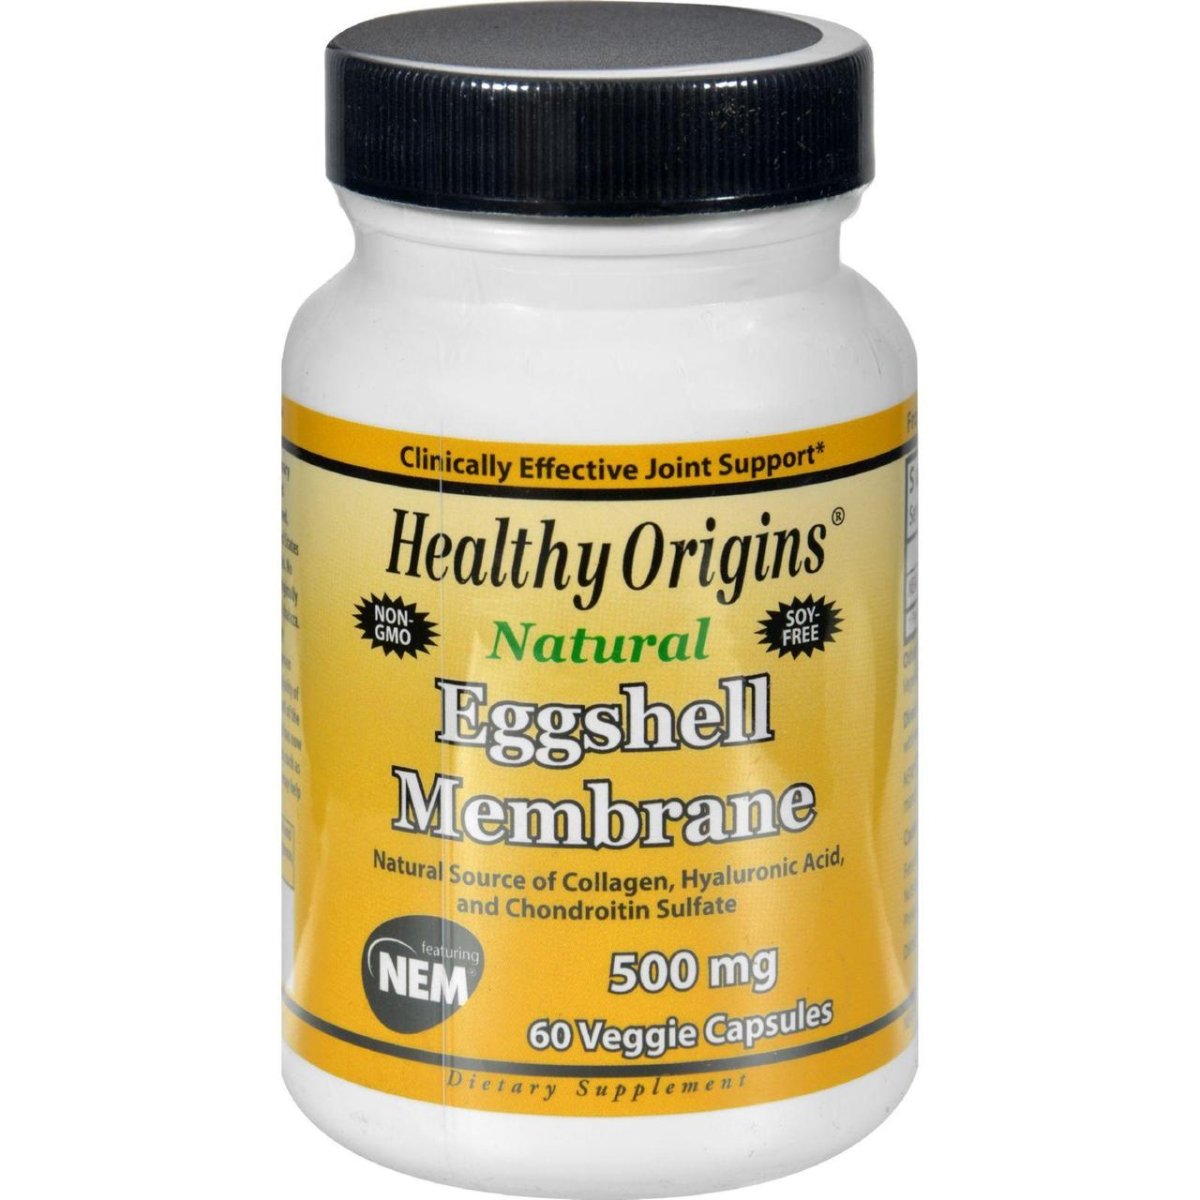 Hg1502012 500 Mg Eggshell Membrane - 60 Vegetarian Capsules